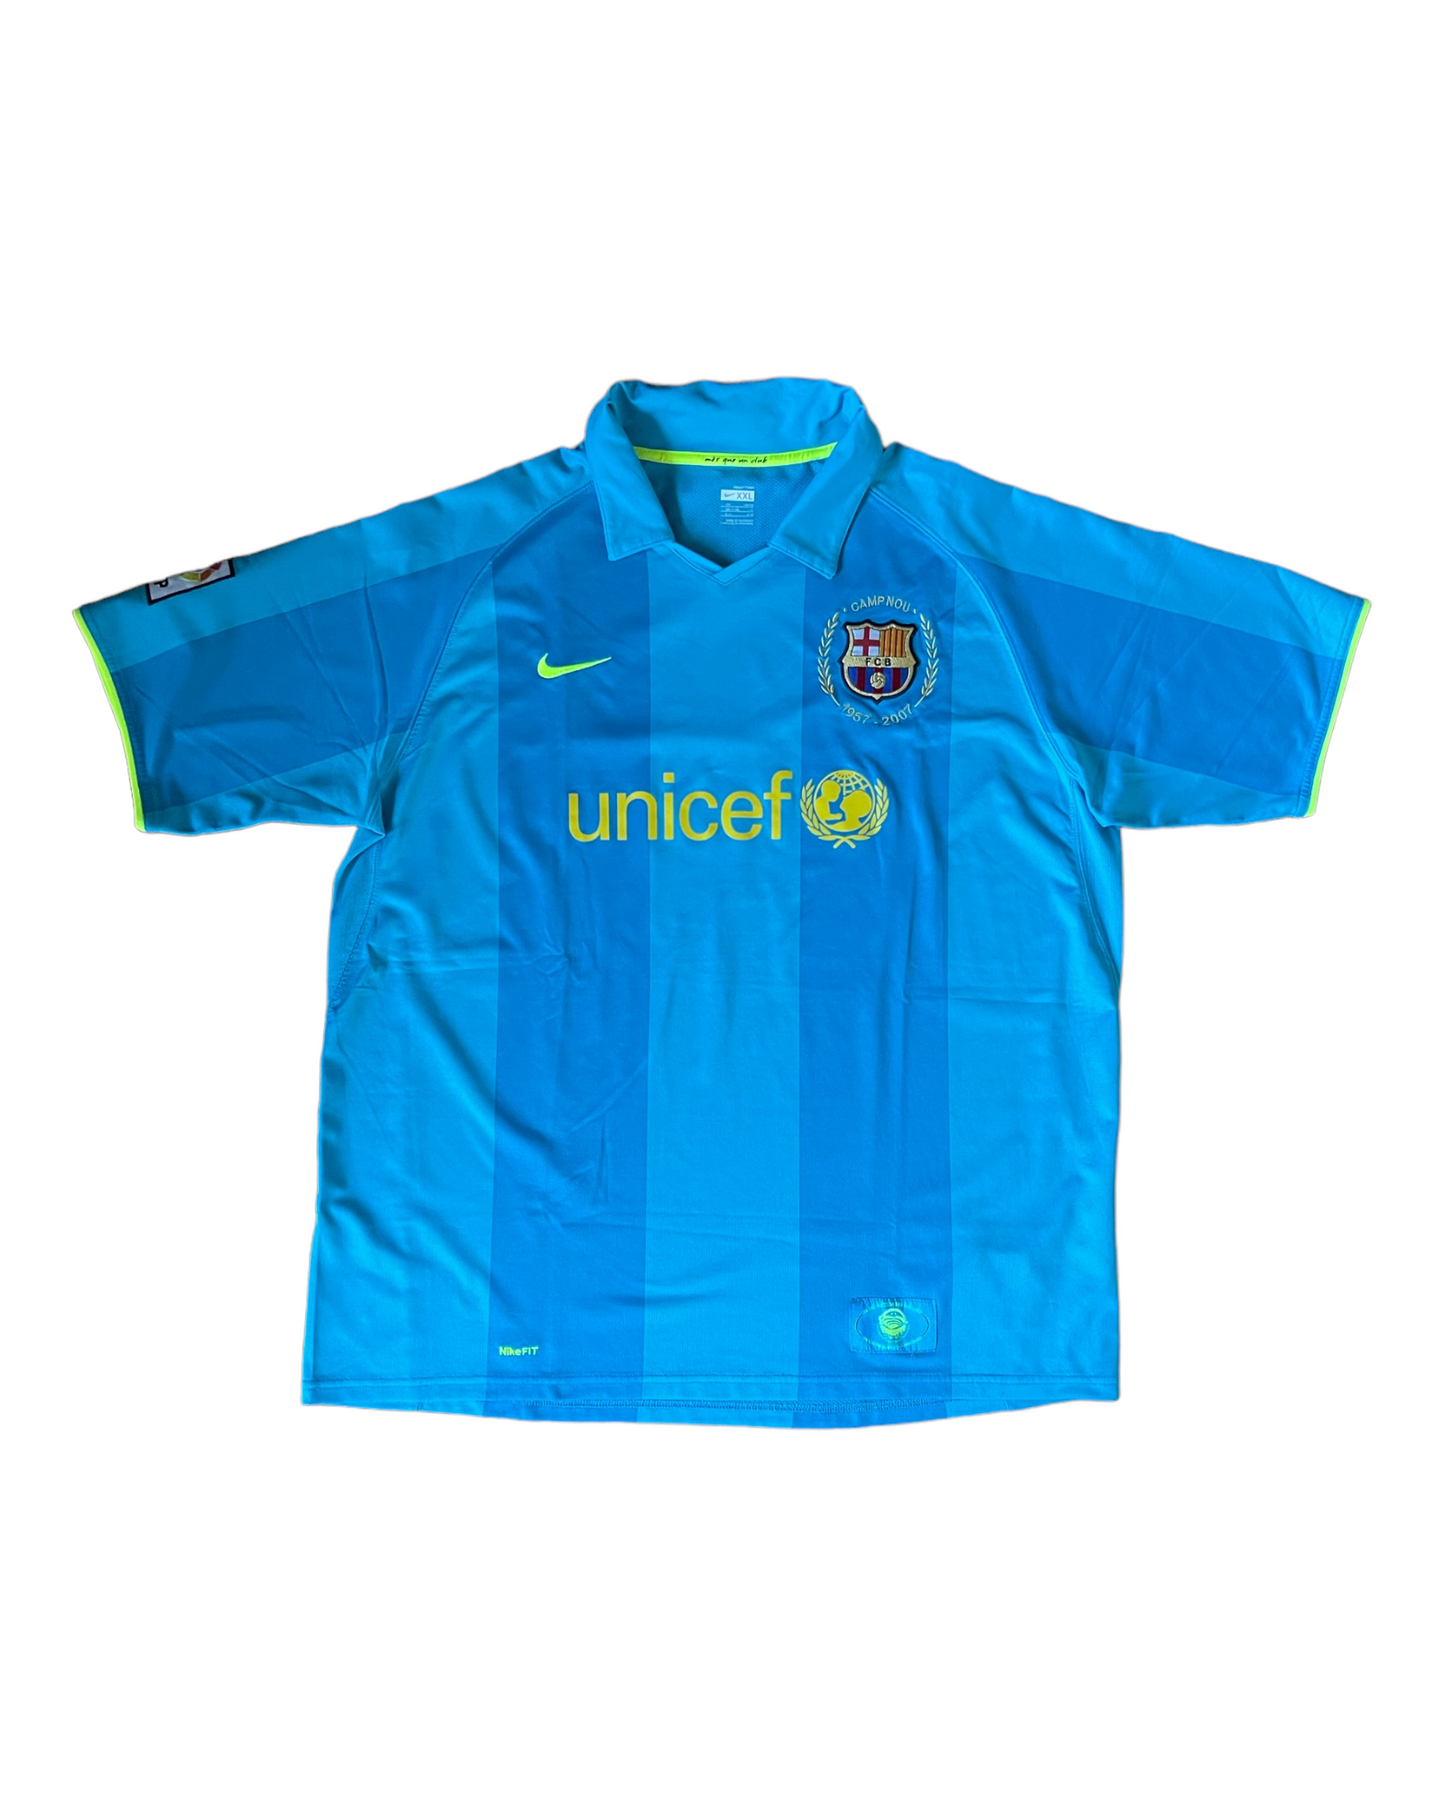 Barcelona Nike 2007-2008 Camp Nou 1957-2007 Away Football Shirt Unicef Blue Size XXL